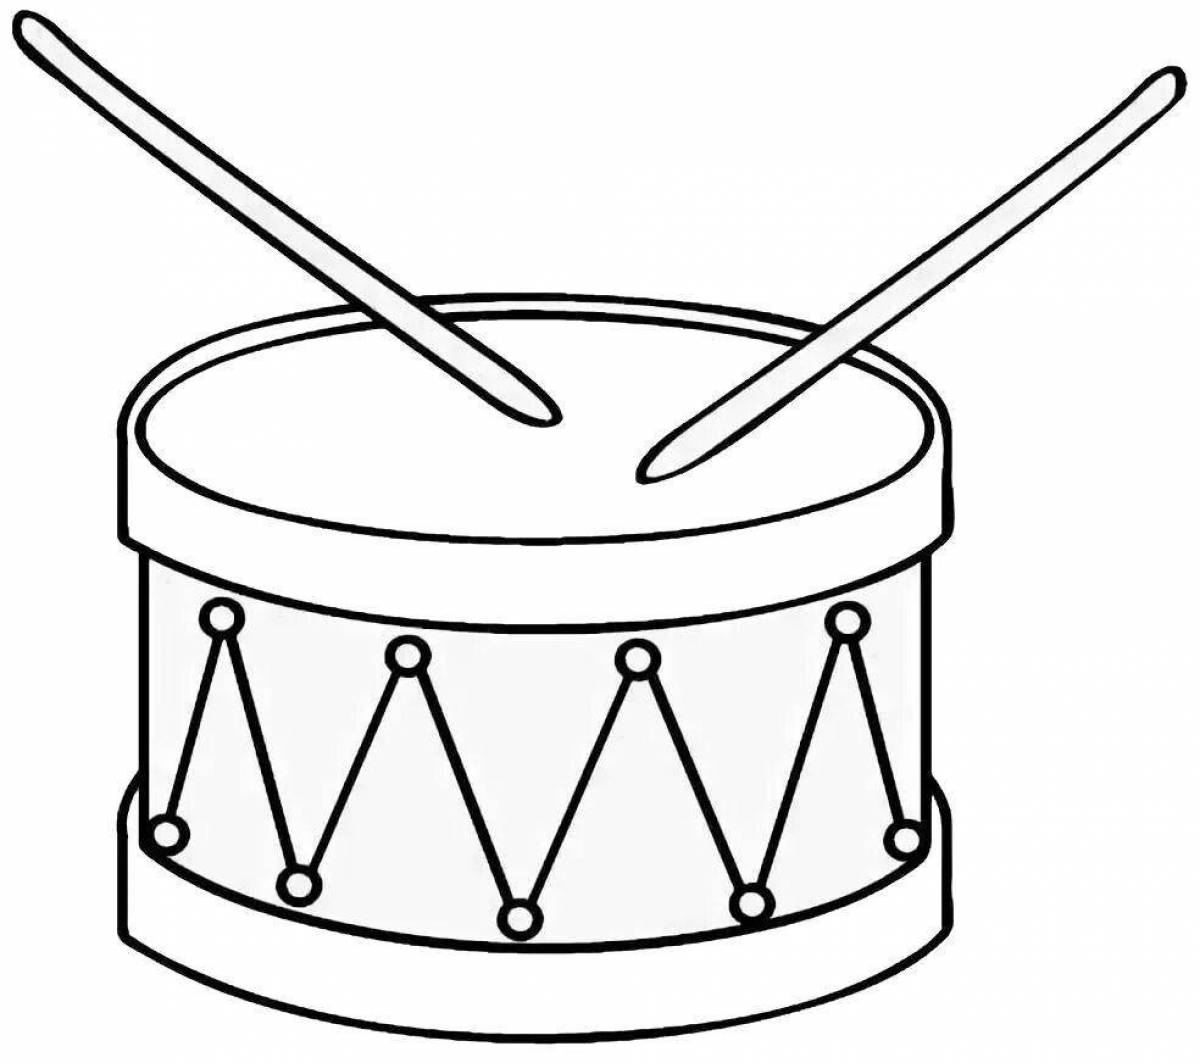 Joyful drum coloring for children 3-4 years old